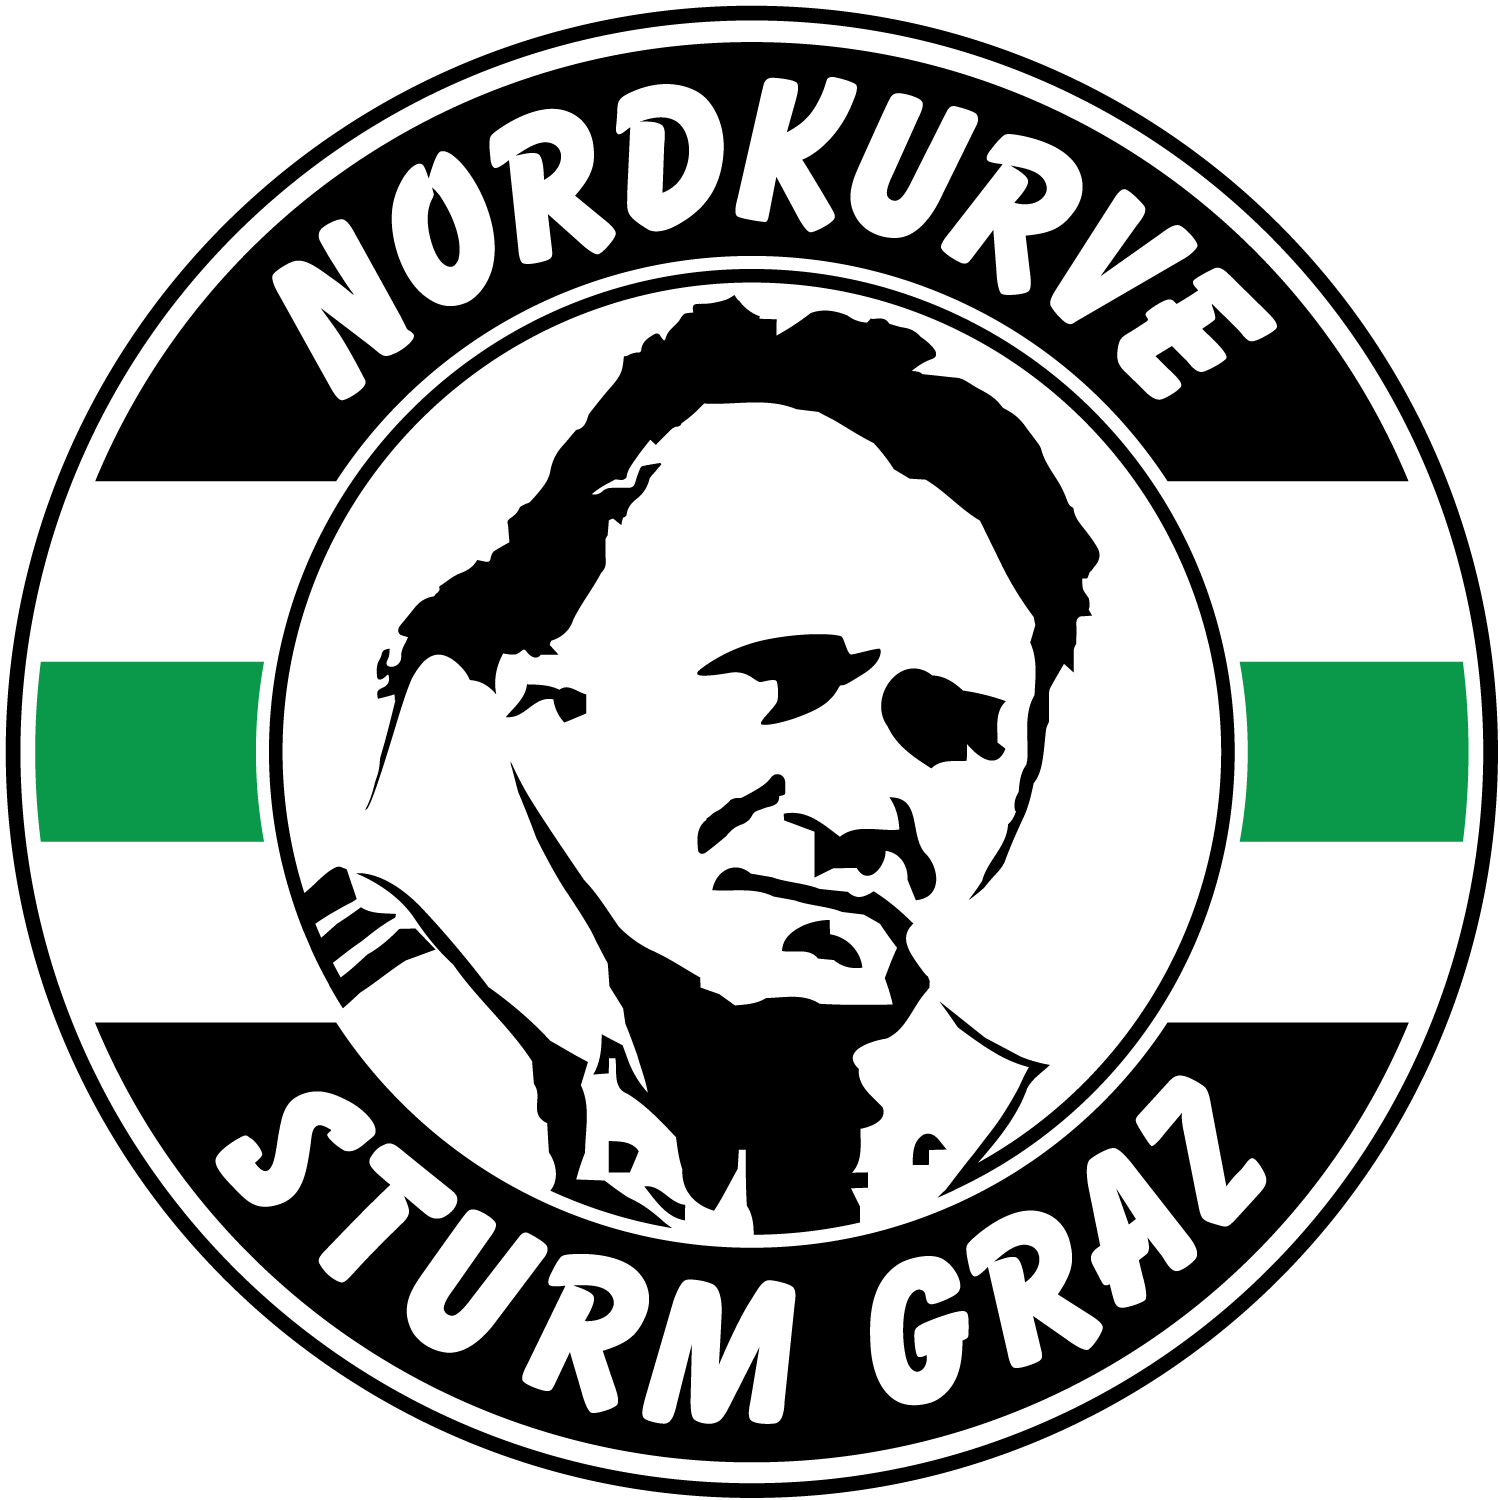 Nordkurve Sturm Graz